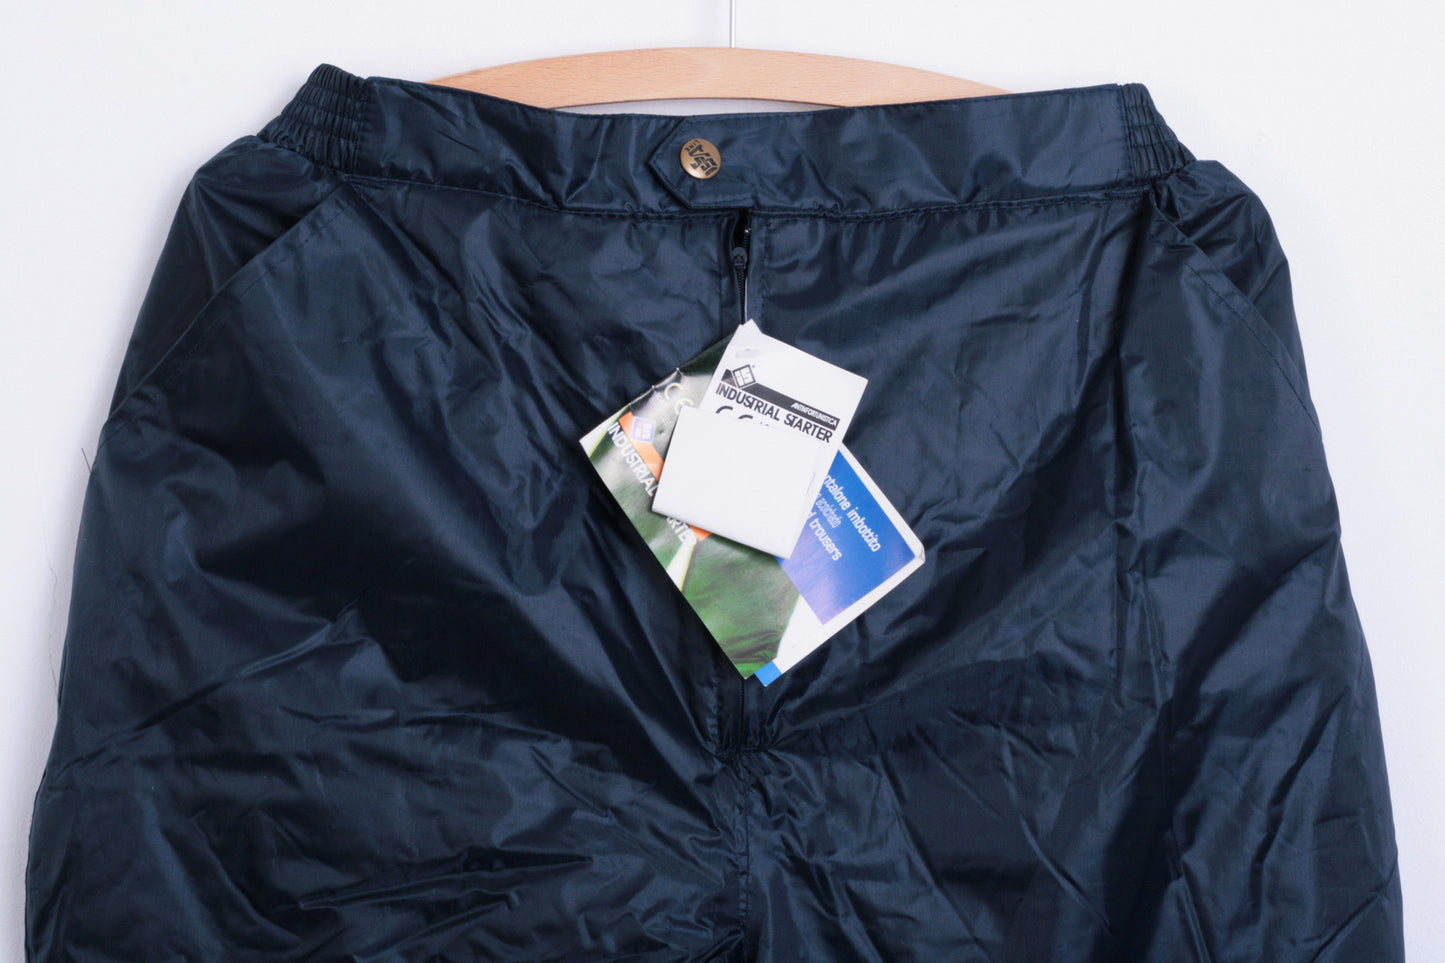 Industrial Starter Womens M Trousers Work Padded Navy Blue Winter Soluzioni Aziendali - RetrospectClothes